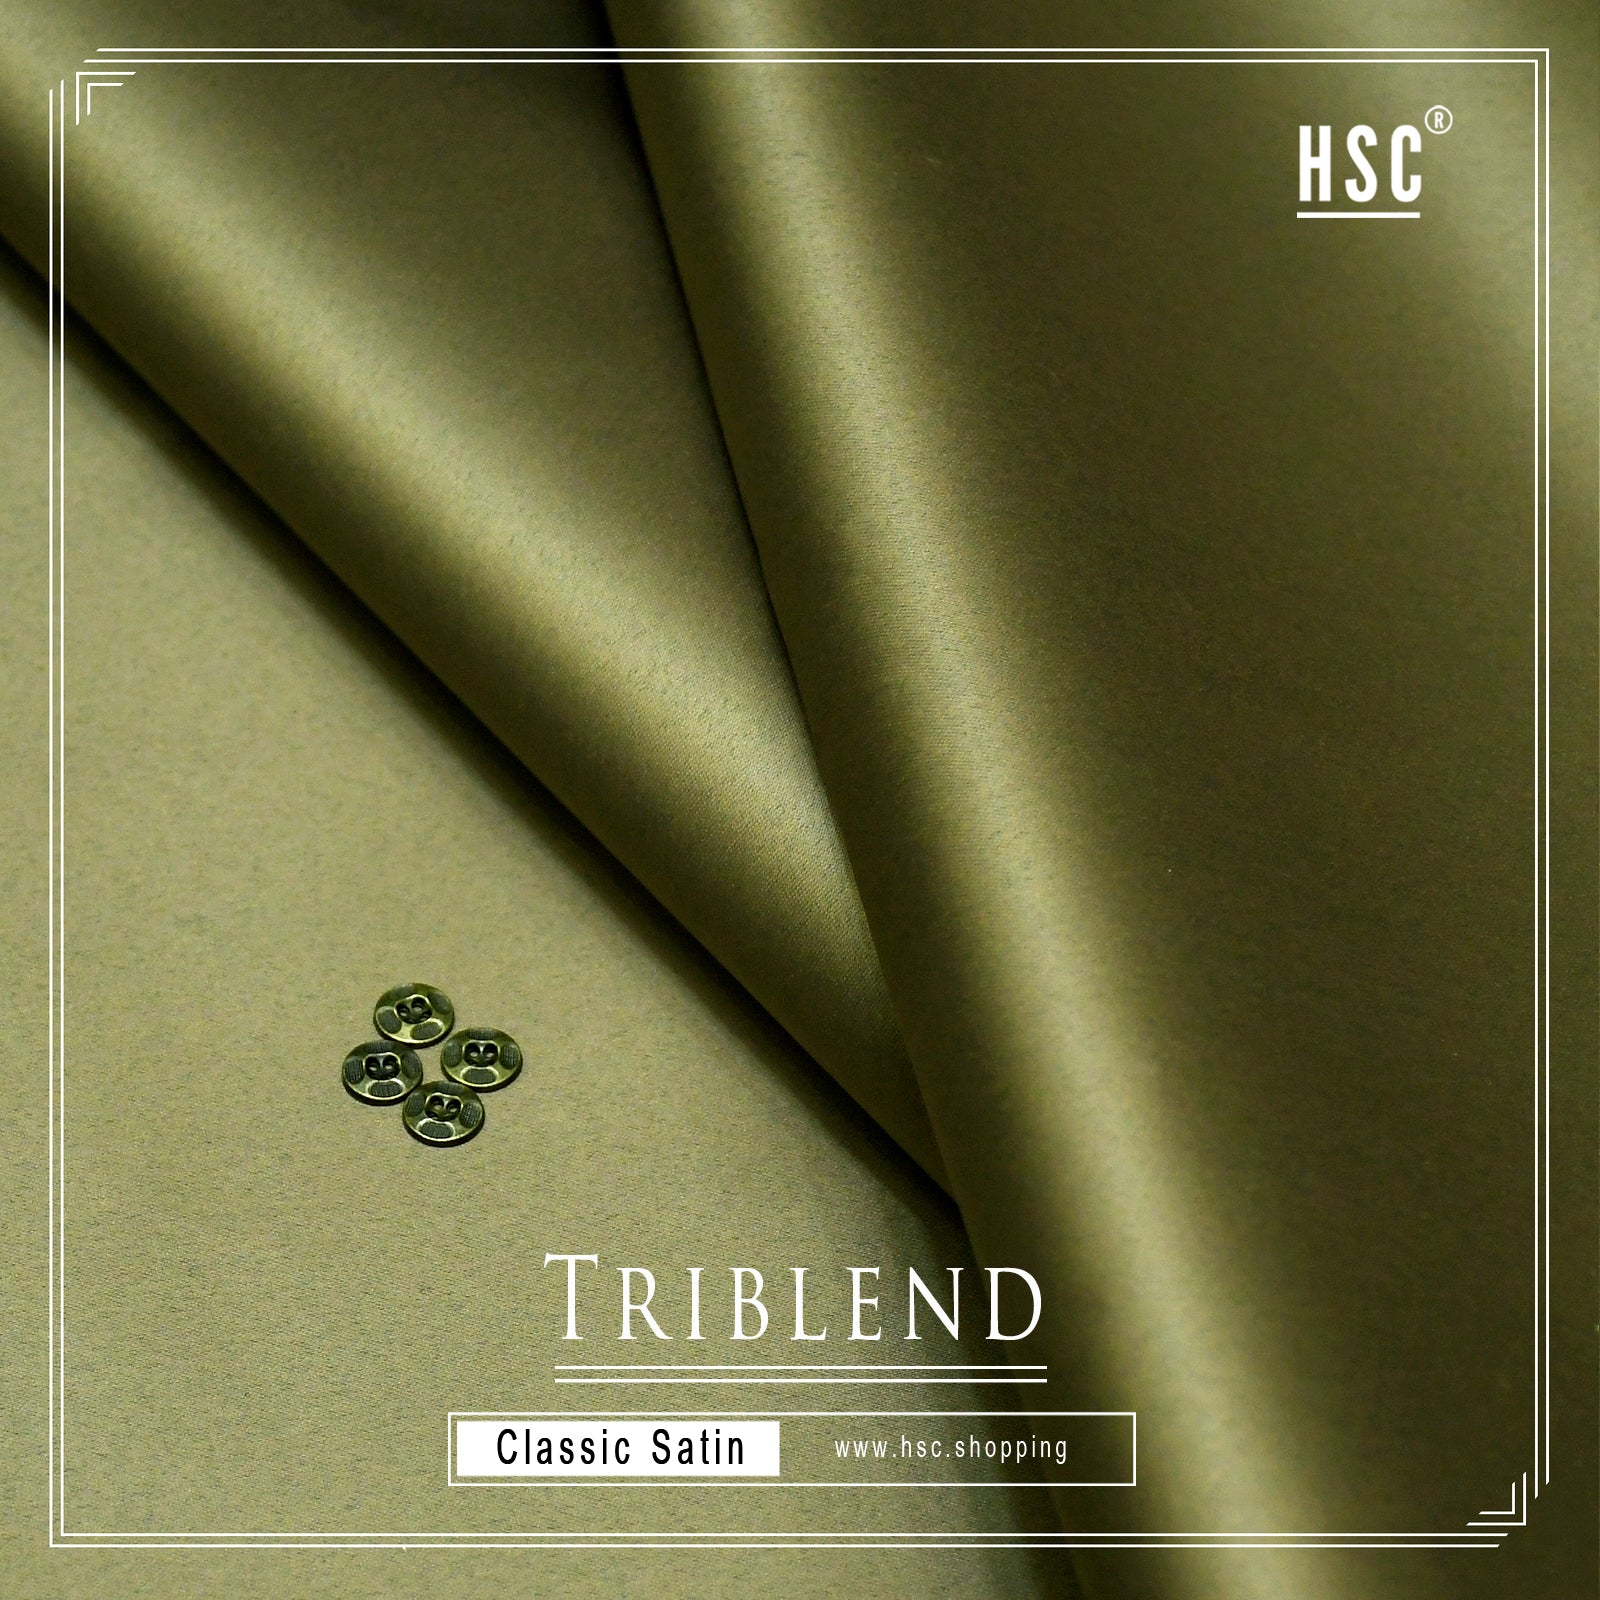 Buy 1 Get 1 Free Triblend Classic Satin - TS8 HSC